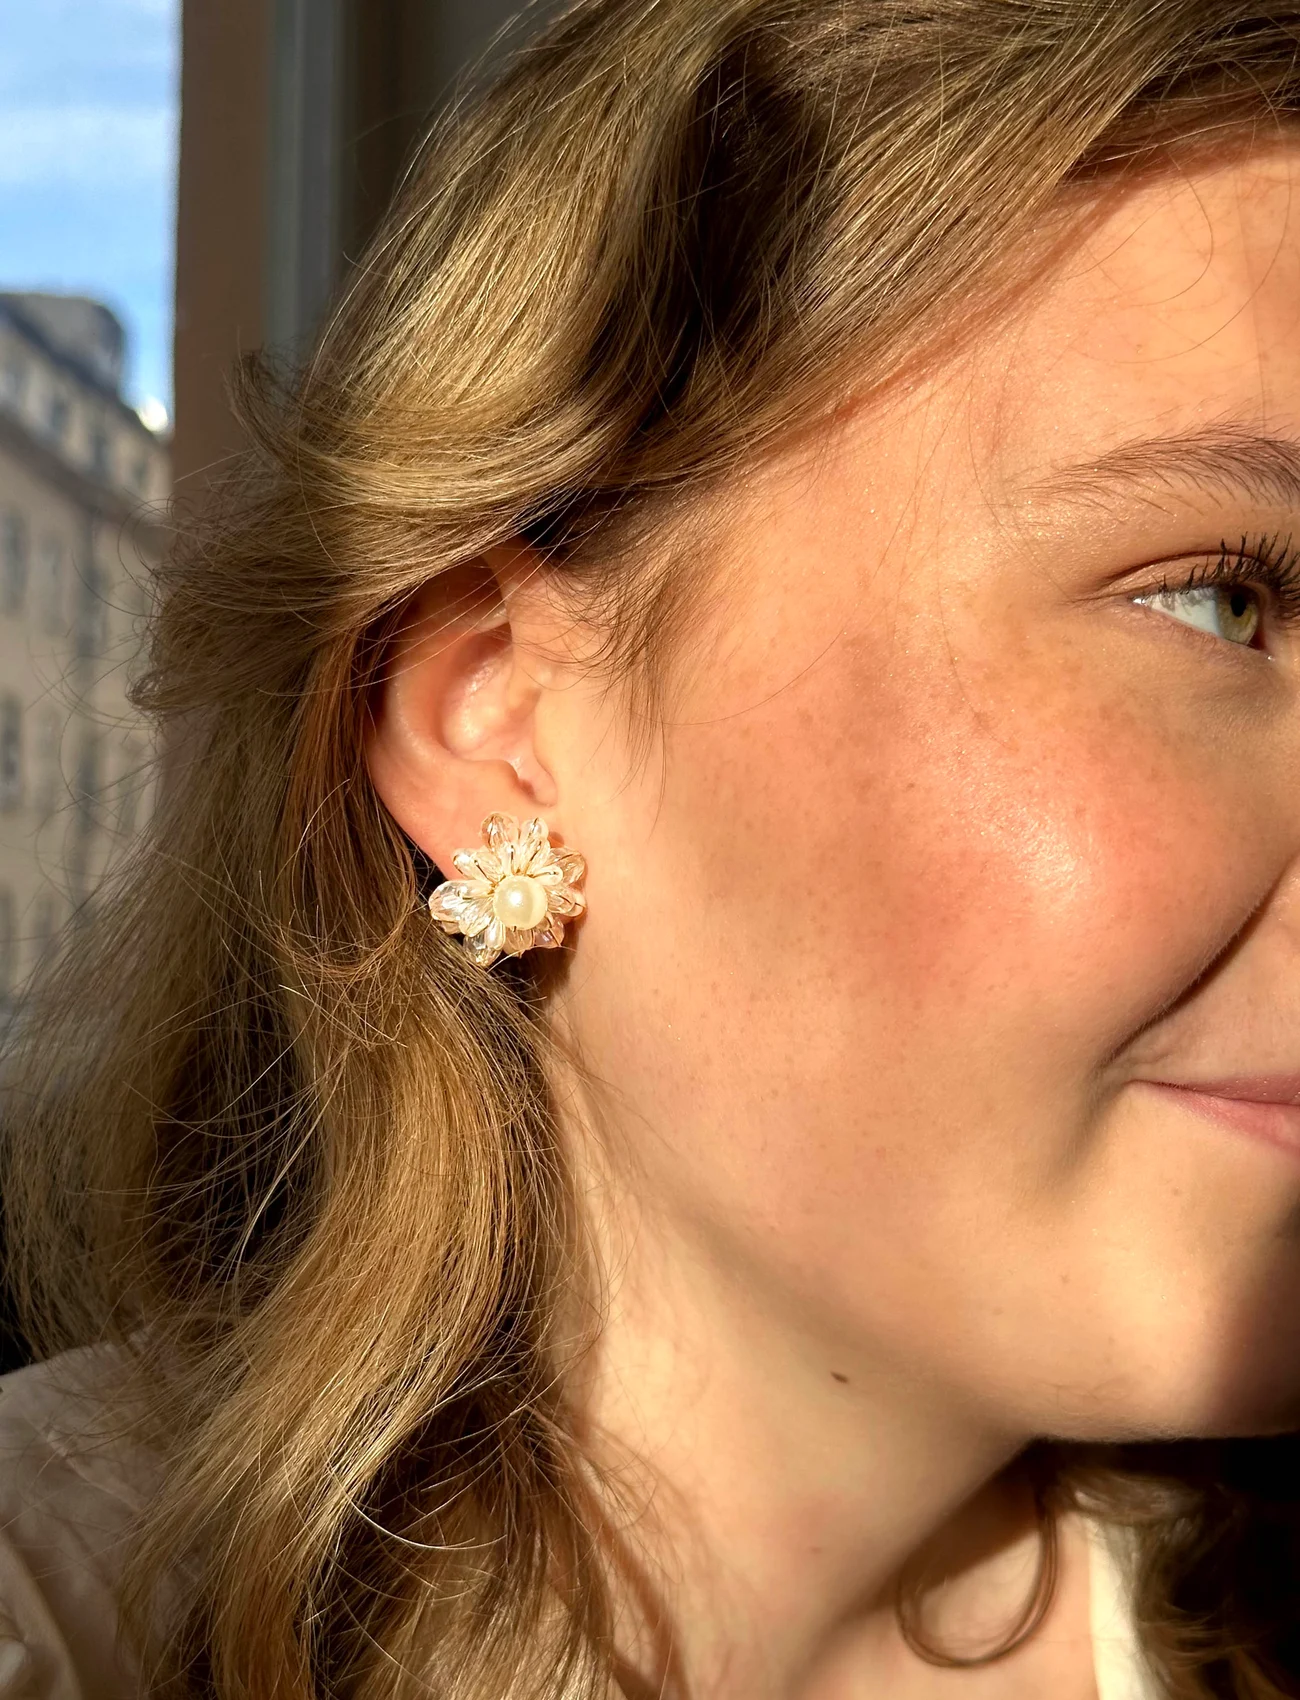 Pipol's Bazaar - Maya Earring - stud earrings - multi - 1